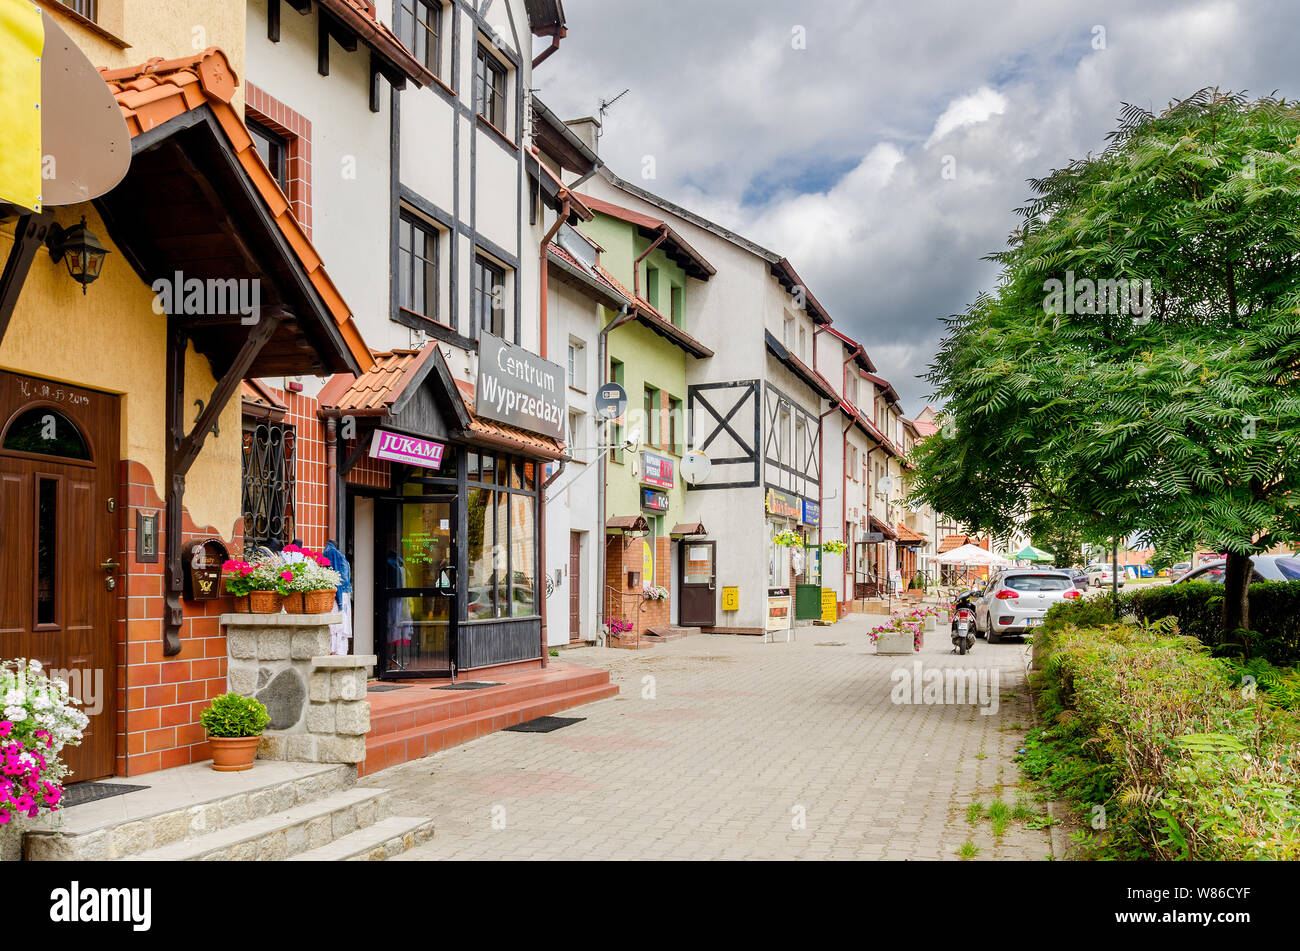 Dobre Miasto, ger. Guttstadt, warmian-mazurian province, Poland. John Paul II street. Stock Photo